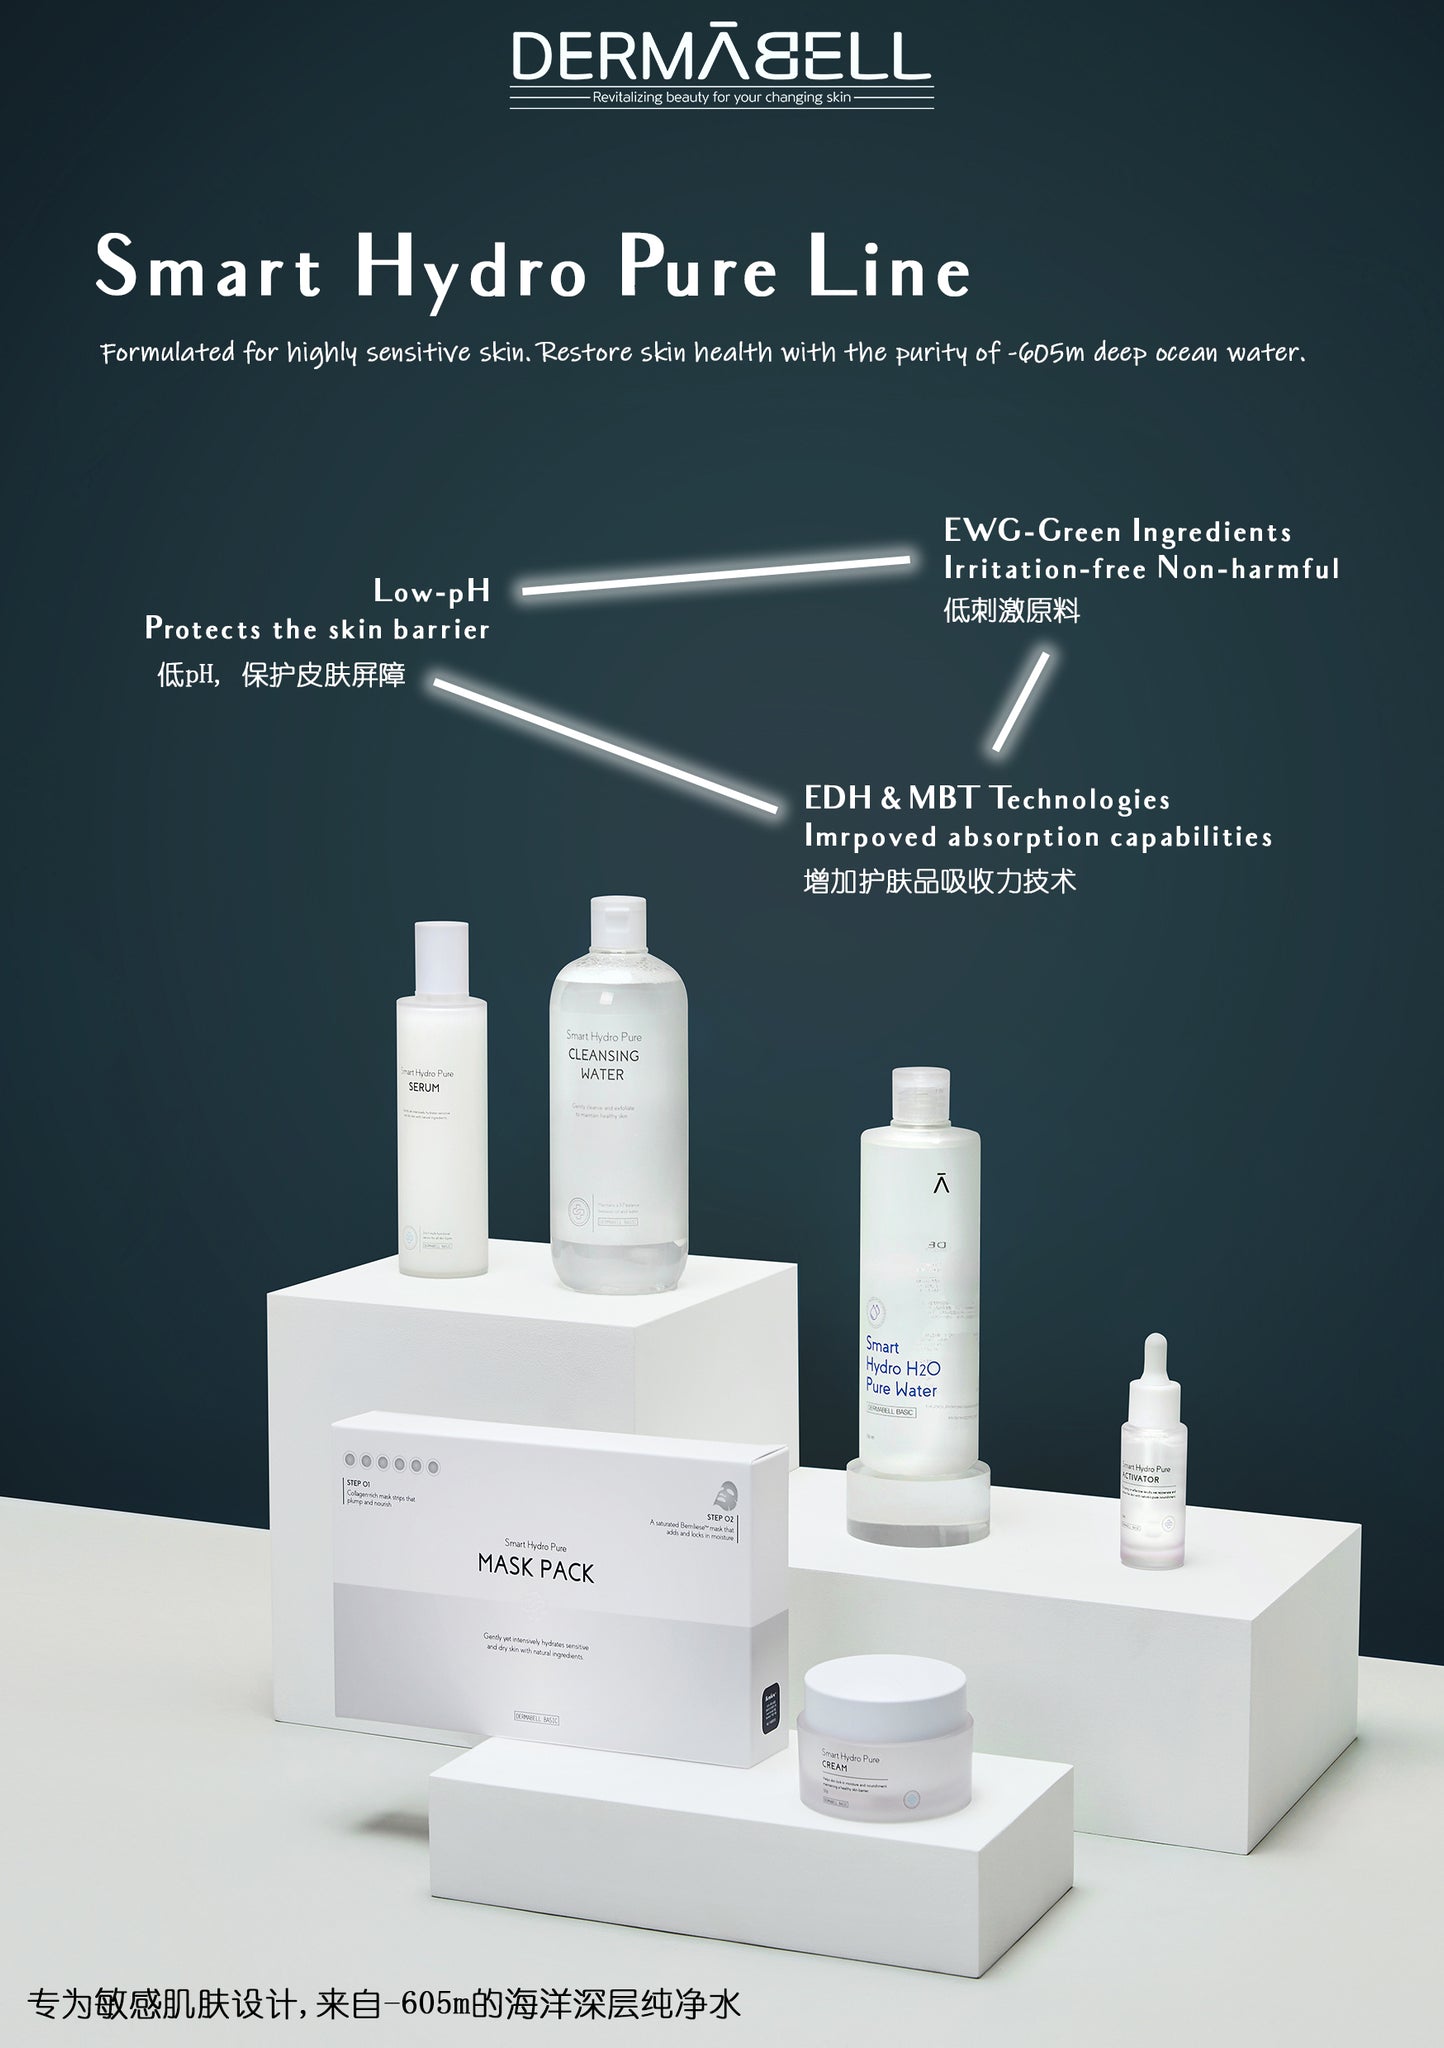 Smart Hydro Pure Line / Cosmeceutical / Korea / Beauty / Skincare / Singapore / Malaysia